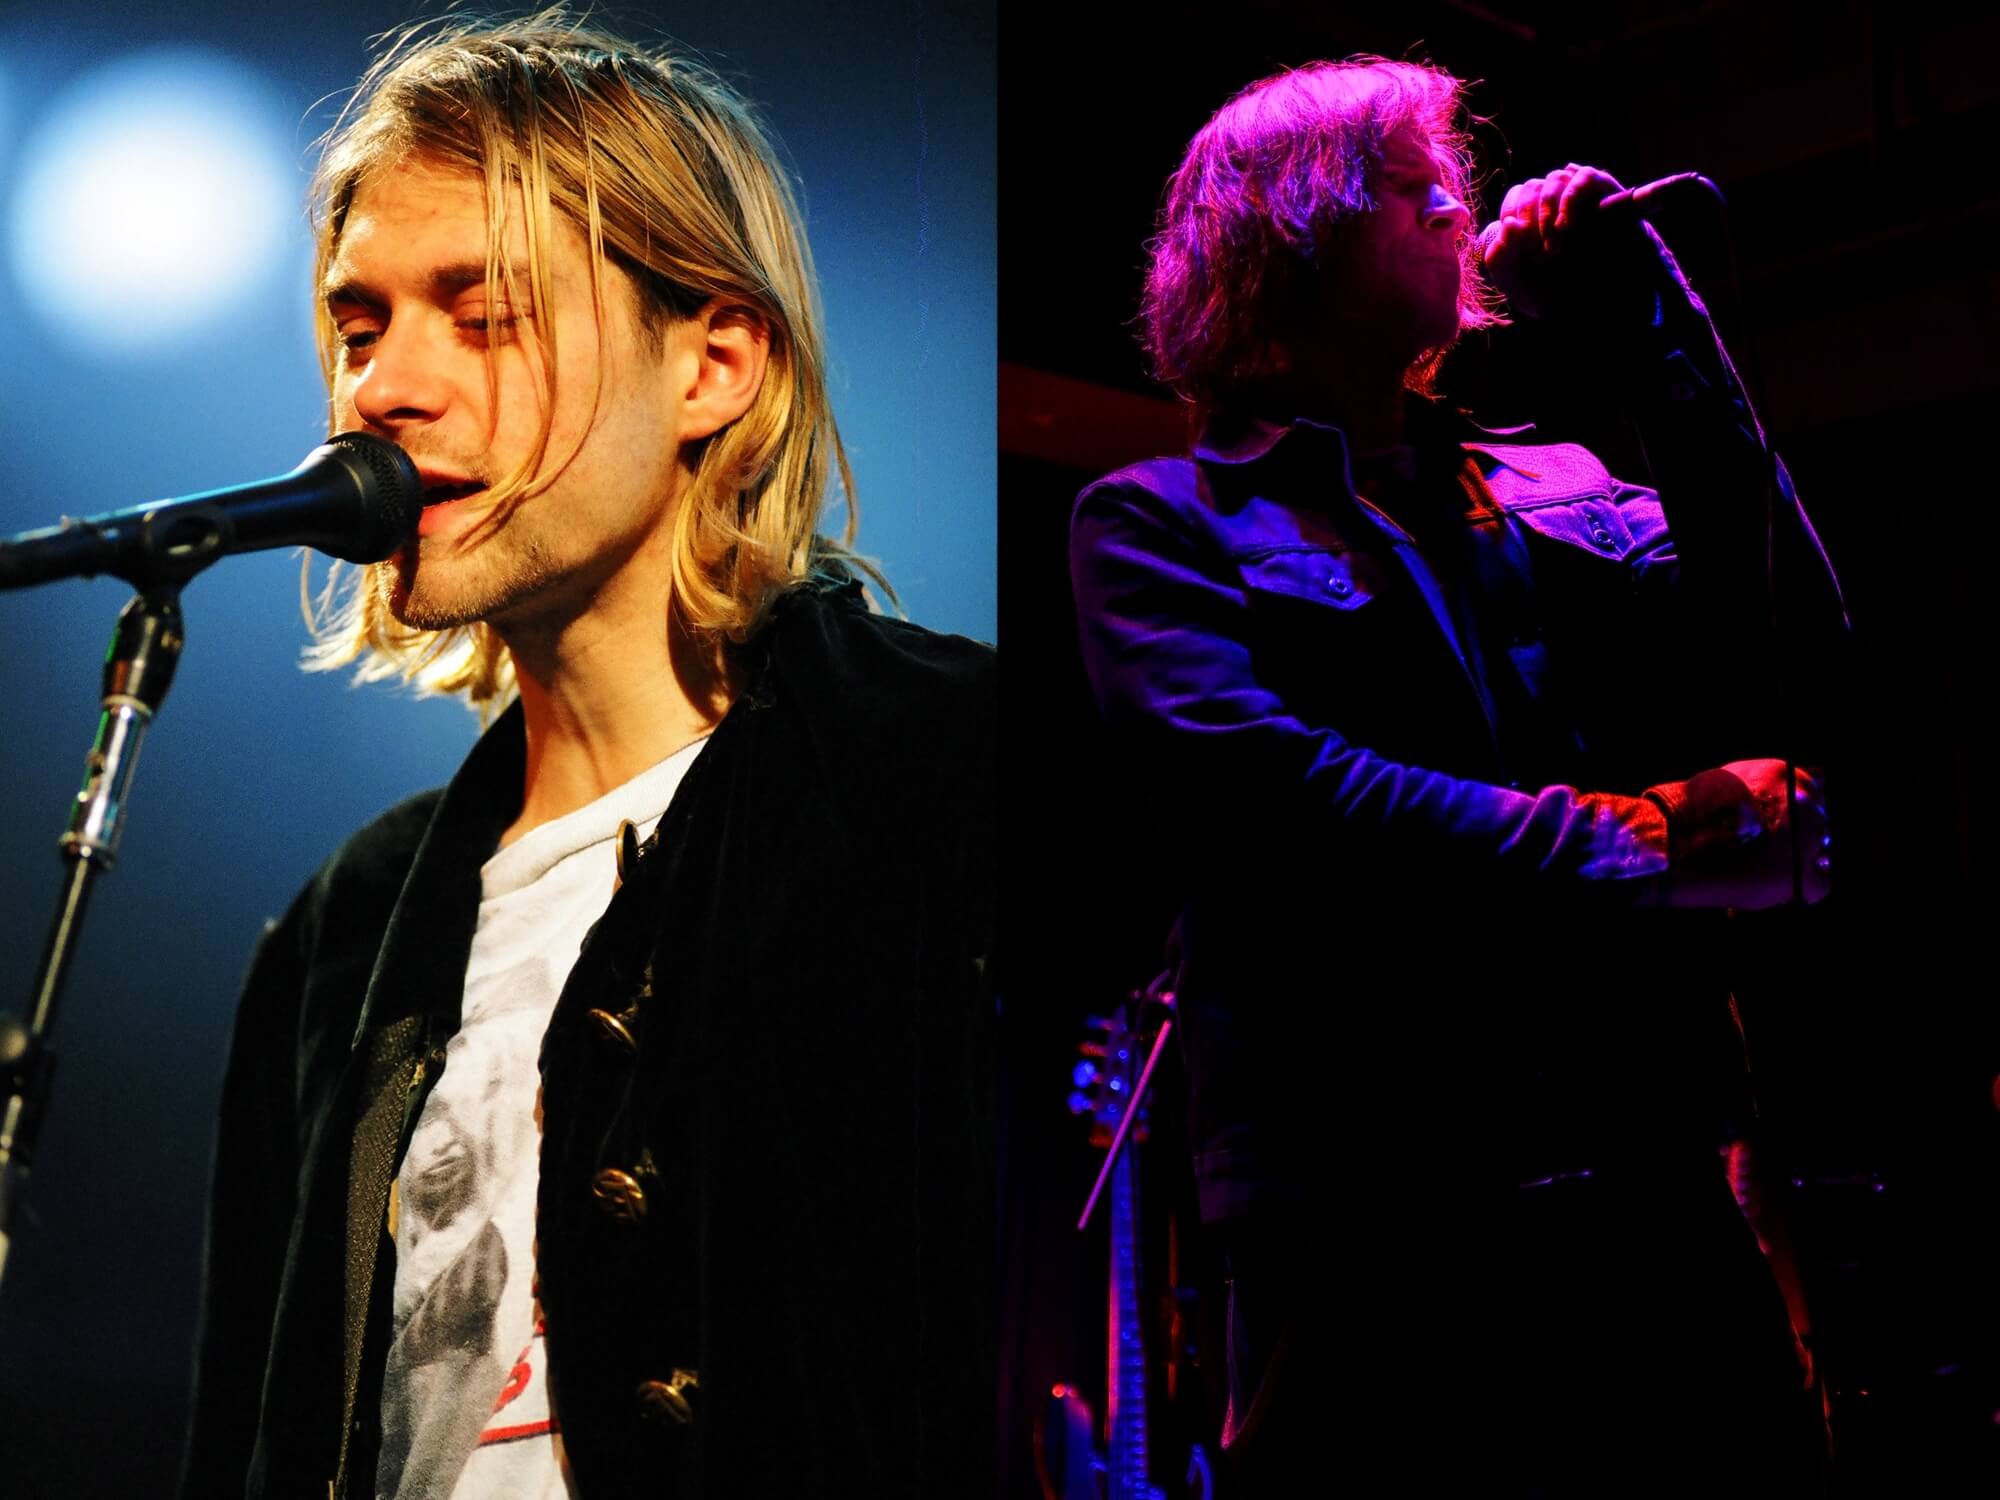 Nirvana's Kurt Cobain and Mark Lenegan of The Screaming Trees